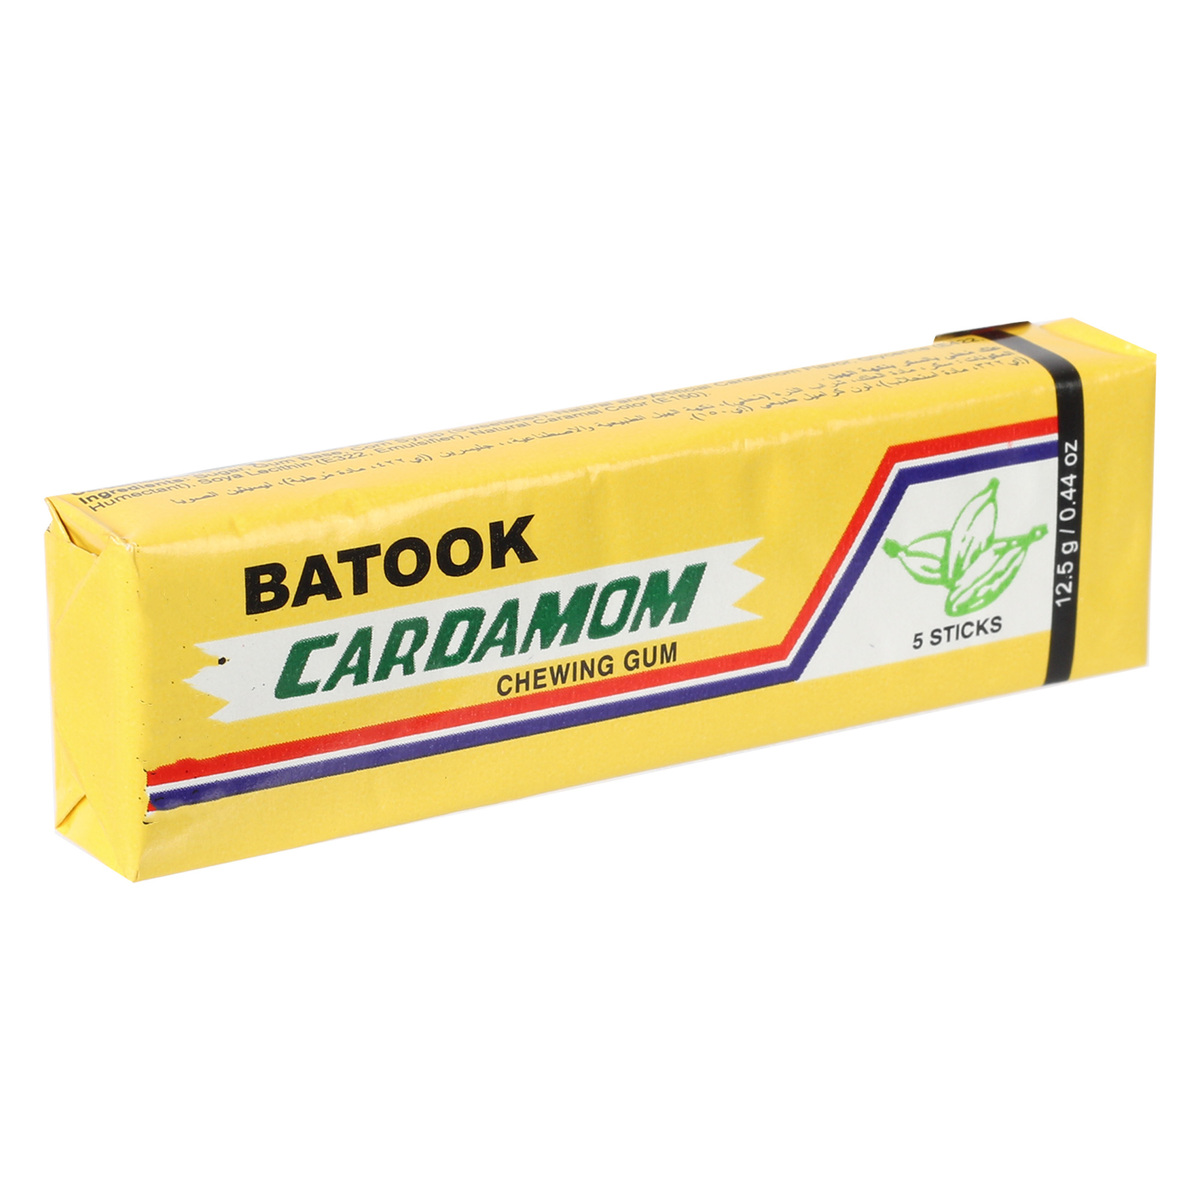 Batook Cardamom Chewing Gum 5 Sticks